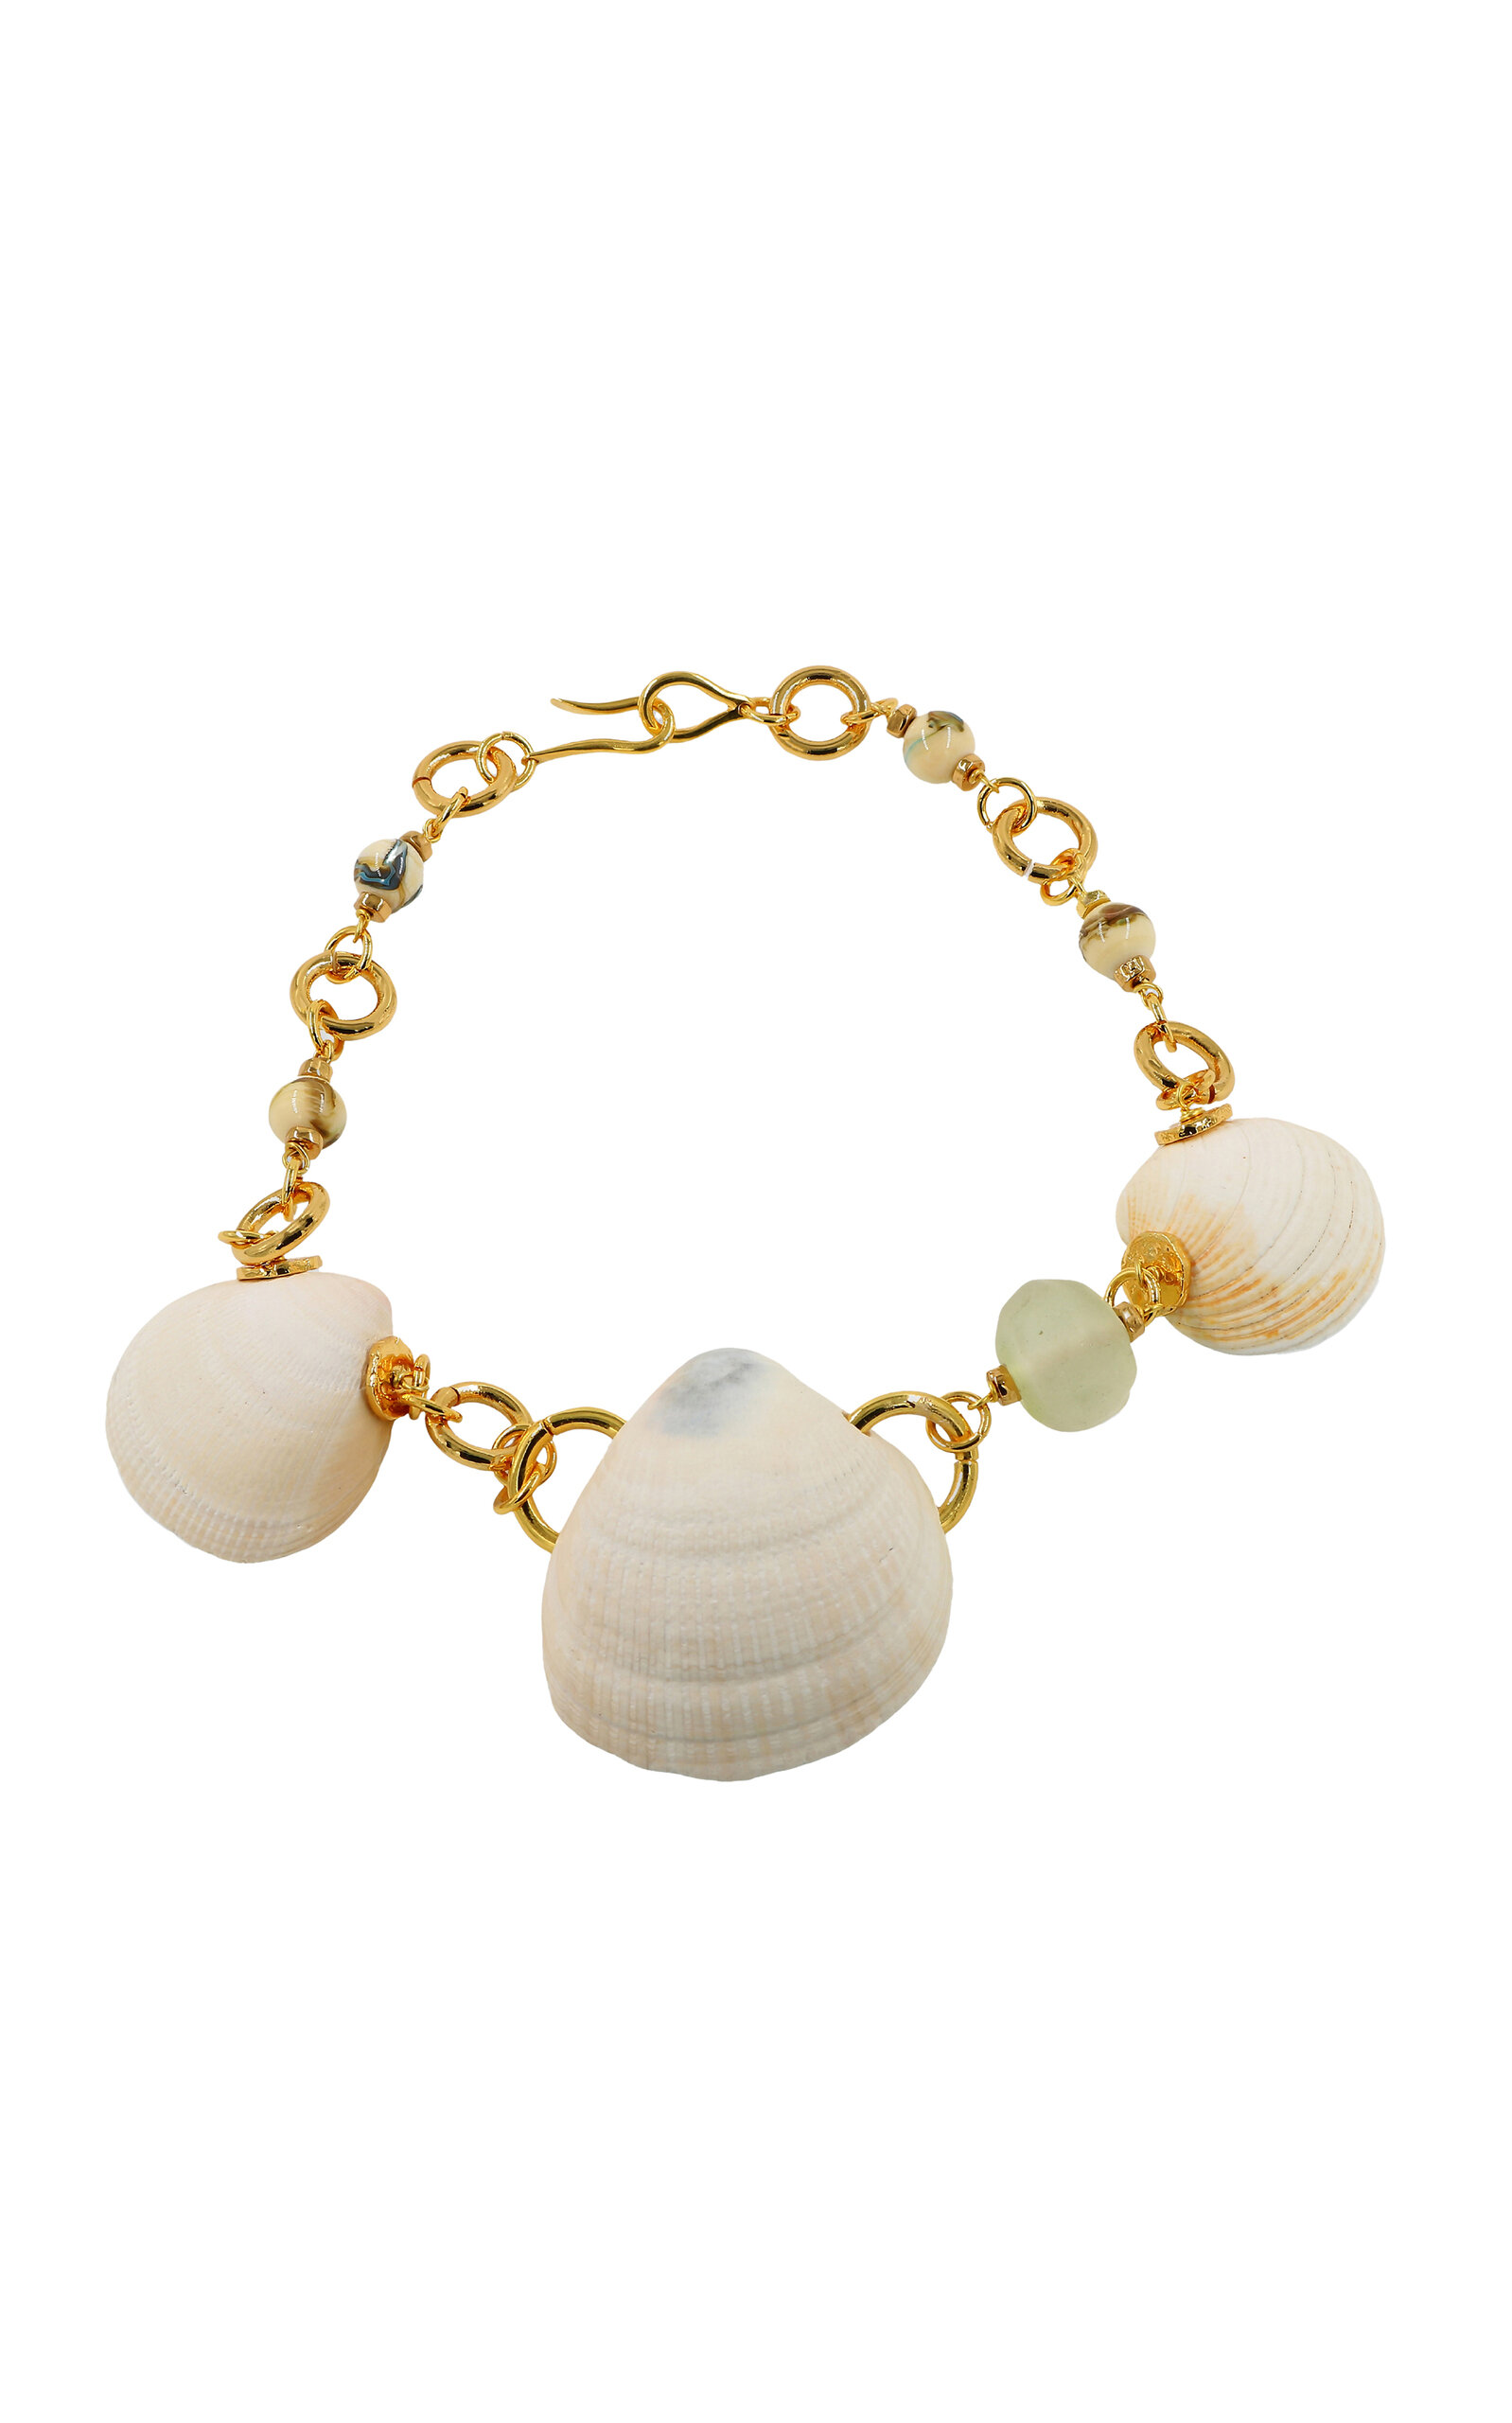 Samsara 24k Gold-Plated Shell Necklace